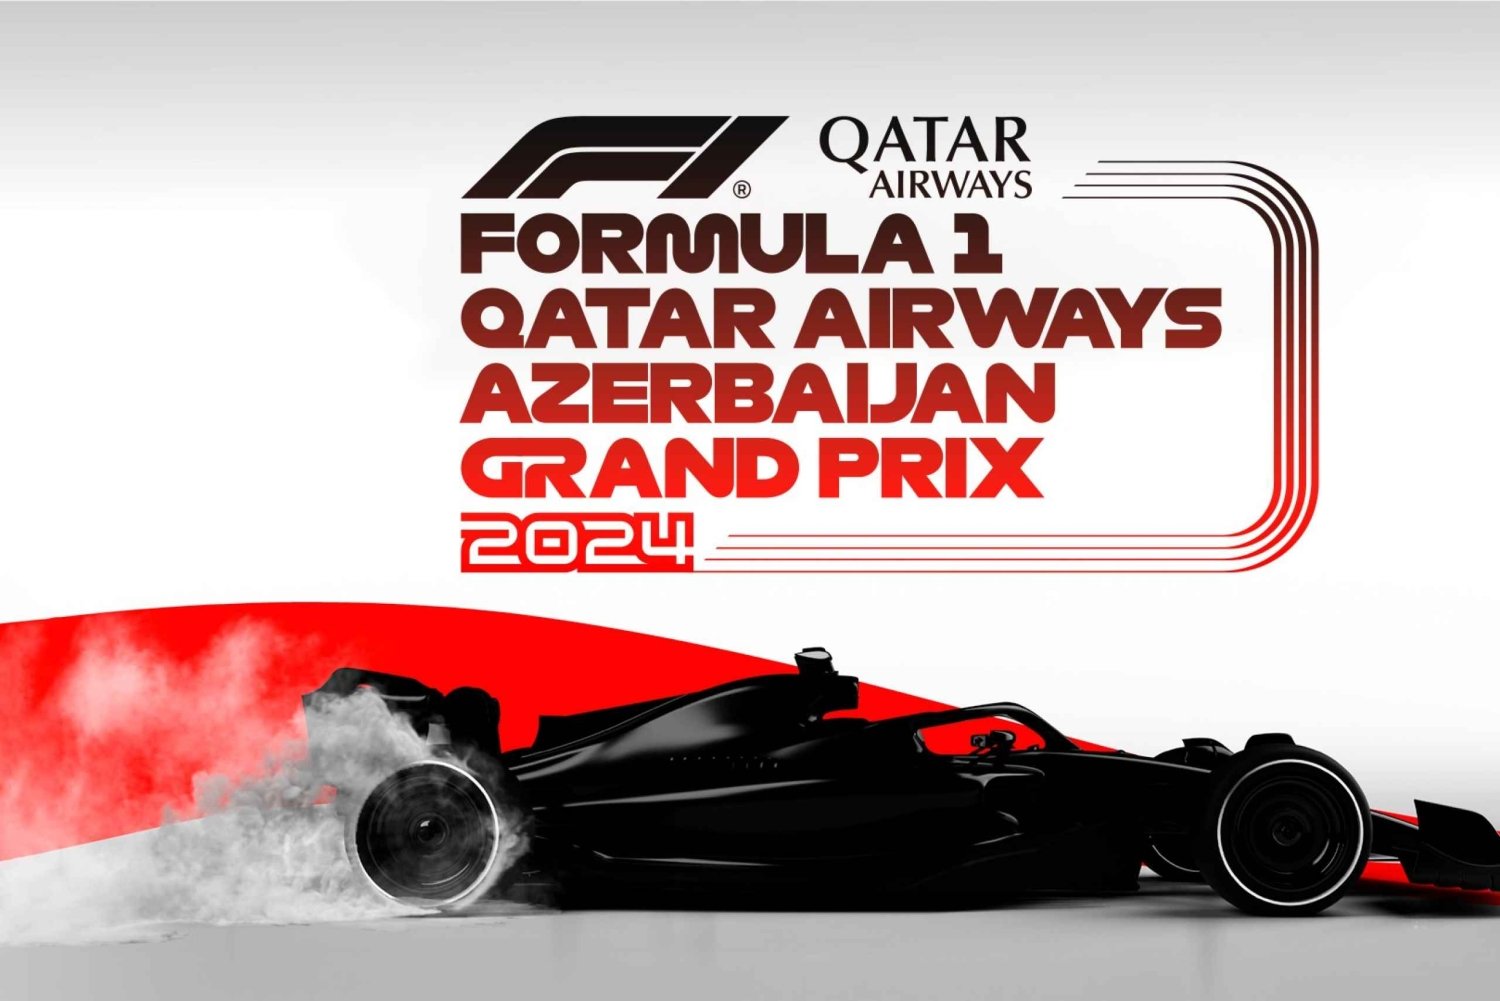 Formel 1 Grand Prix i Baku 5-dagarstur